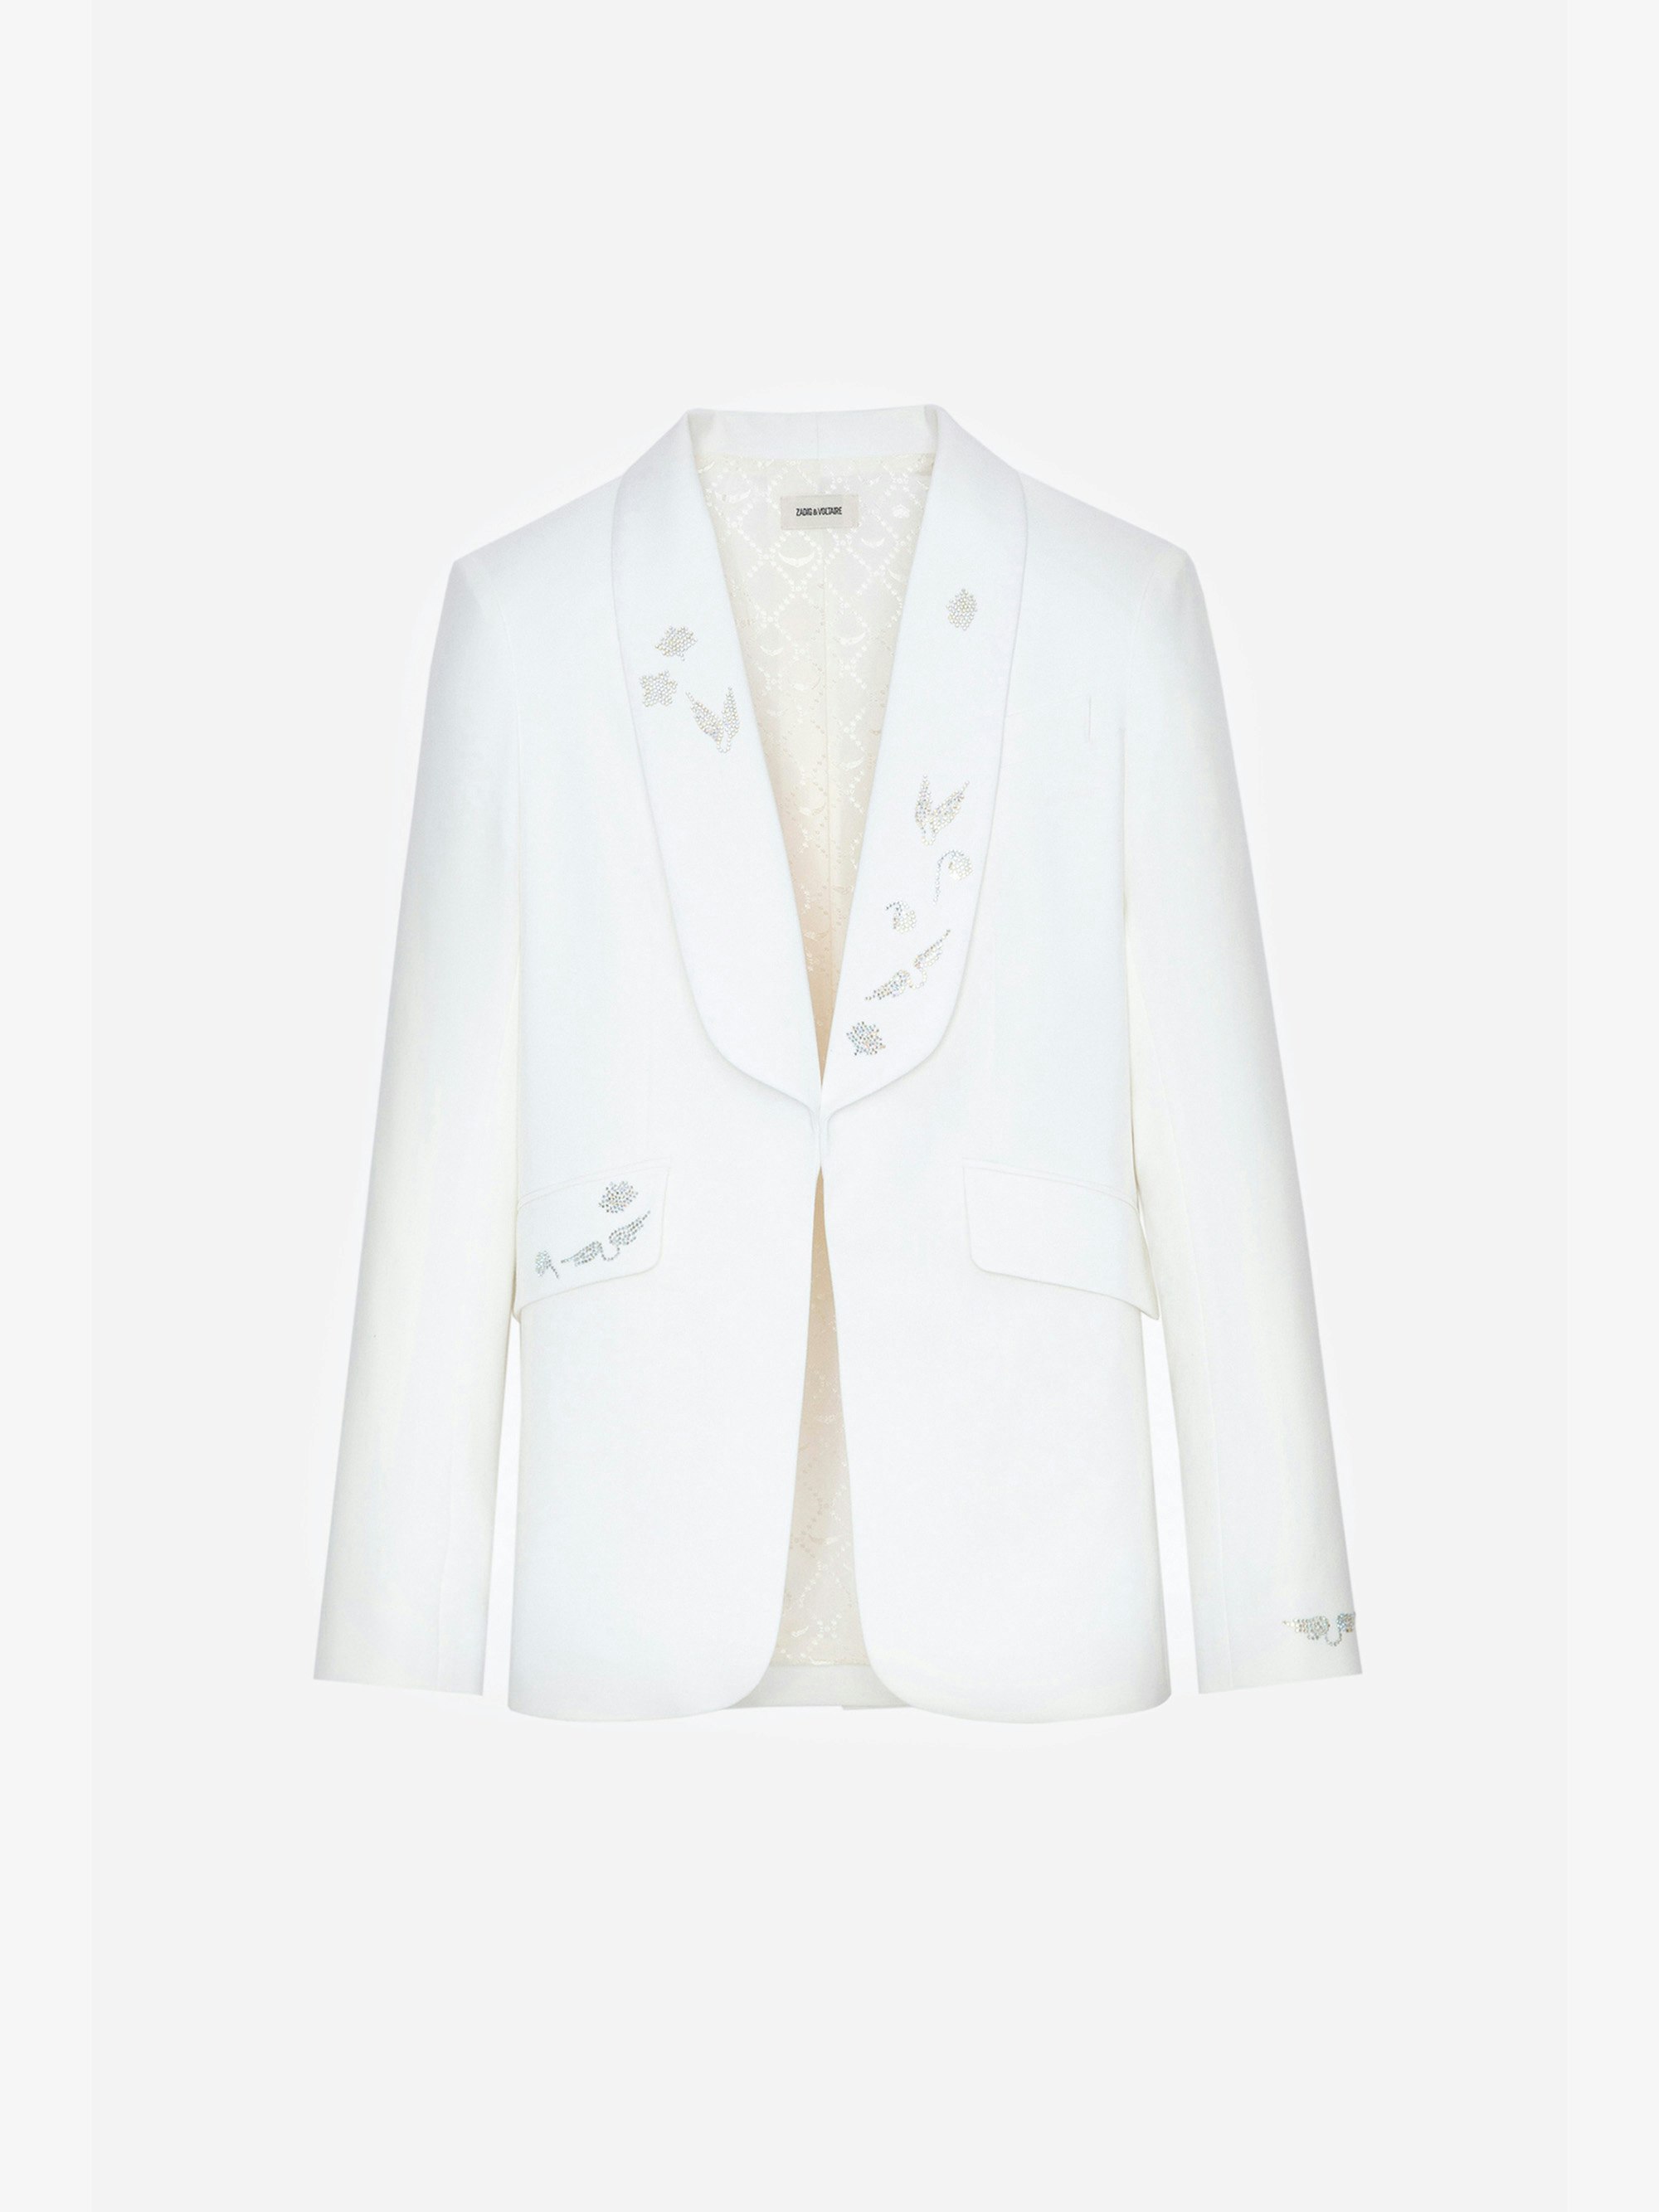 Date Diamanté Blazer - Women's white blazer featuring round collar and diamanté wing embellishment.